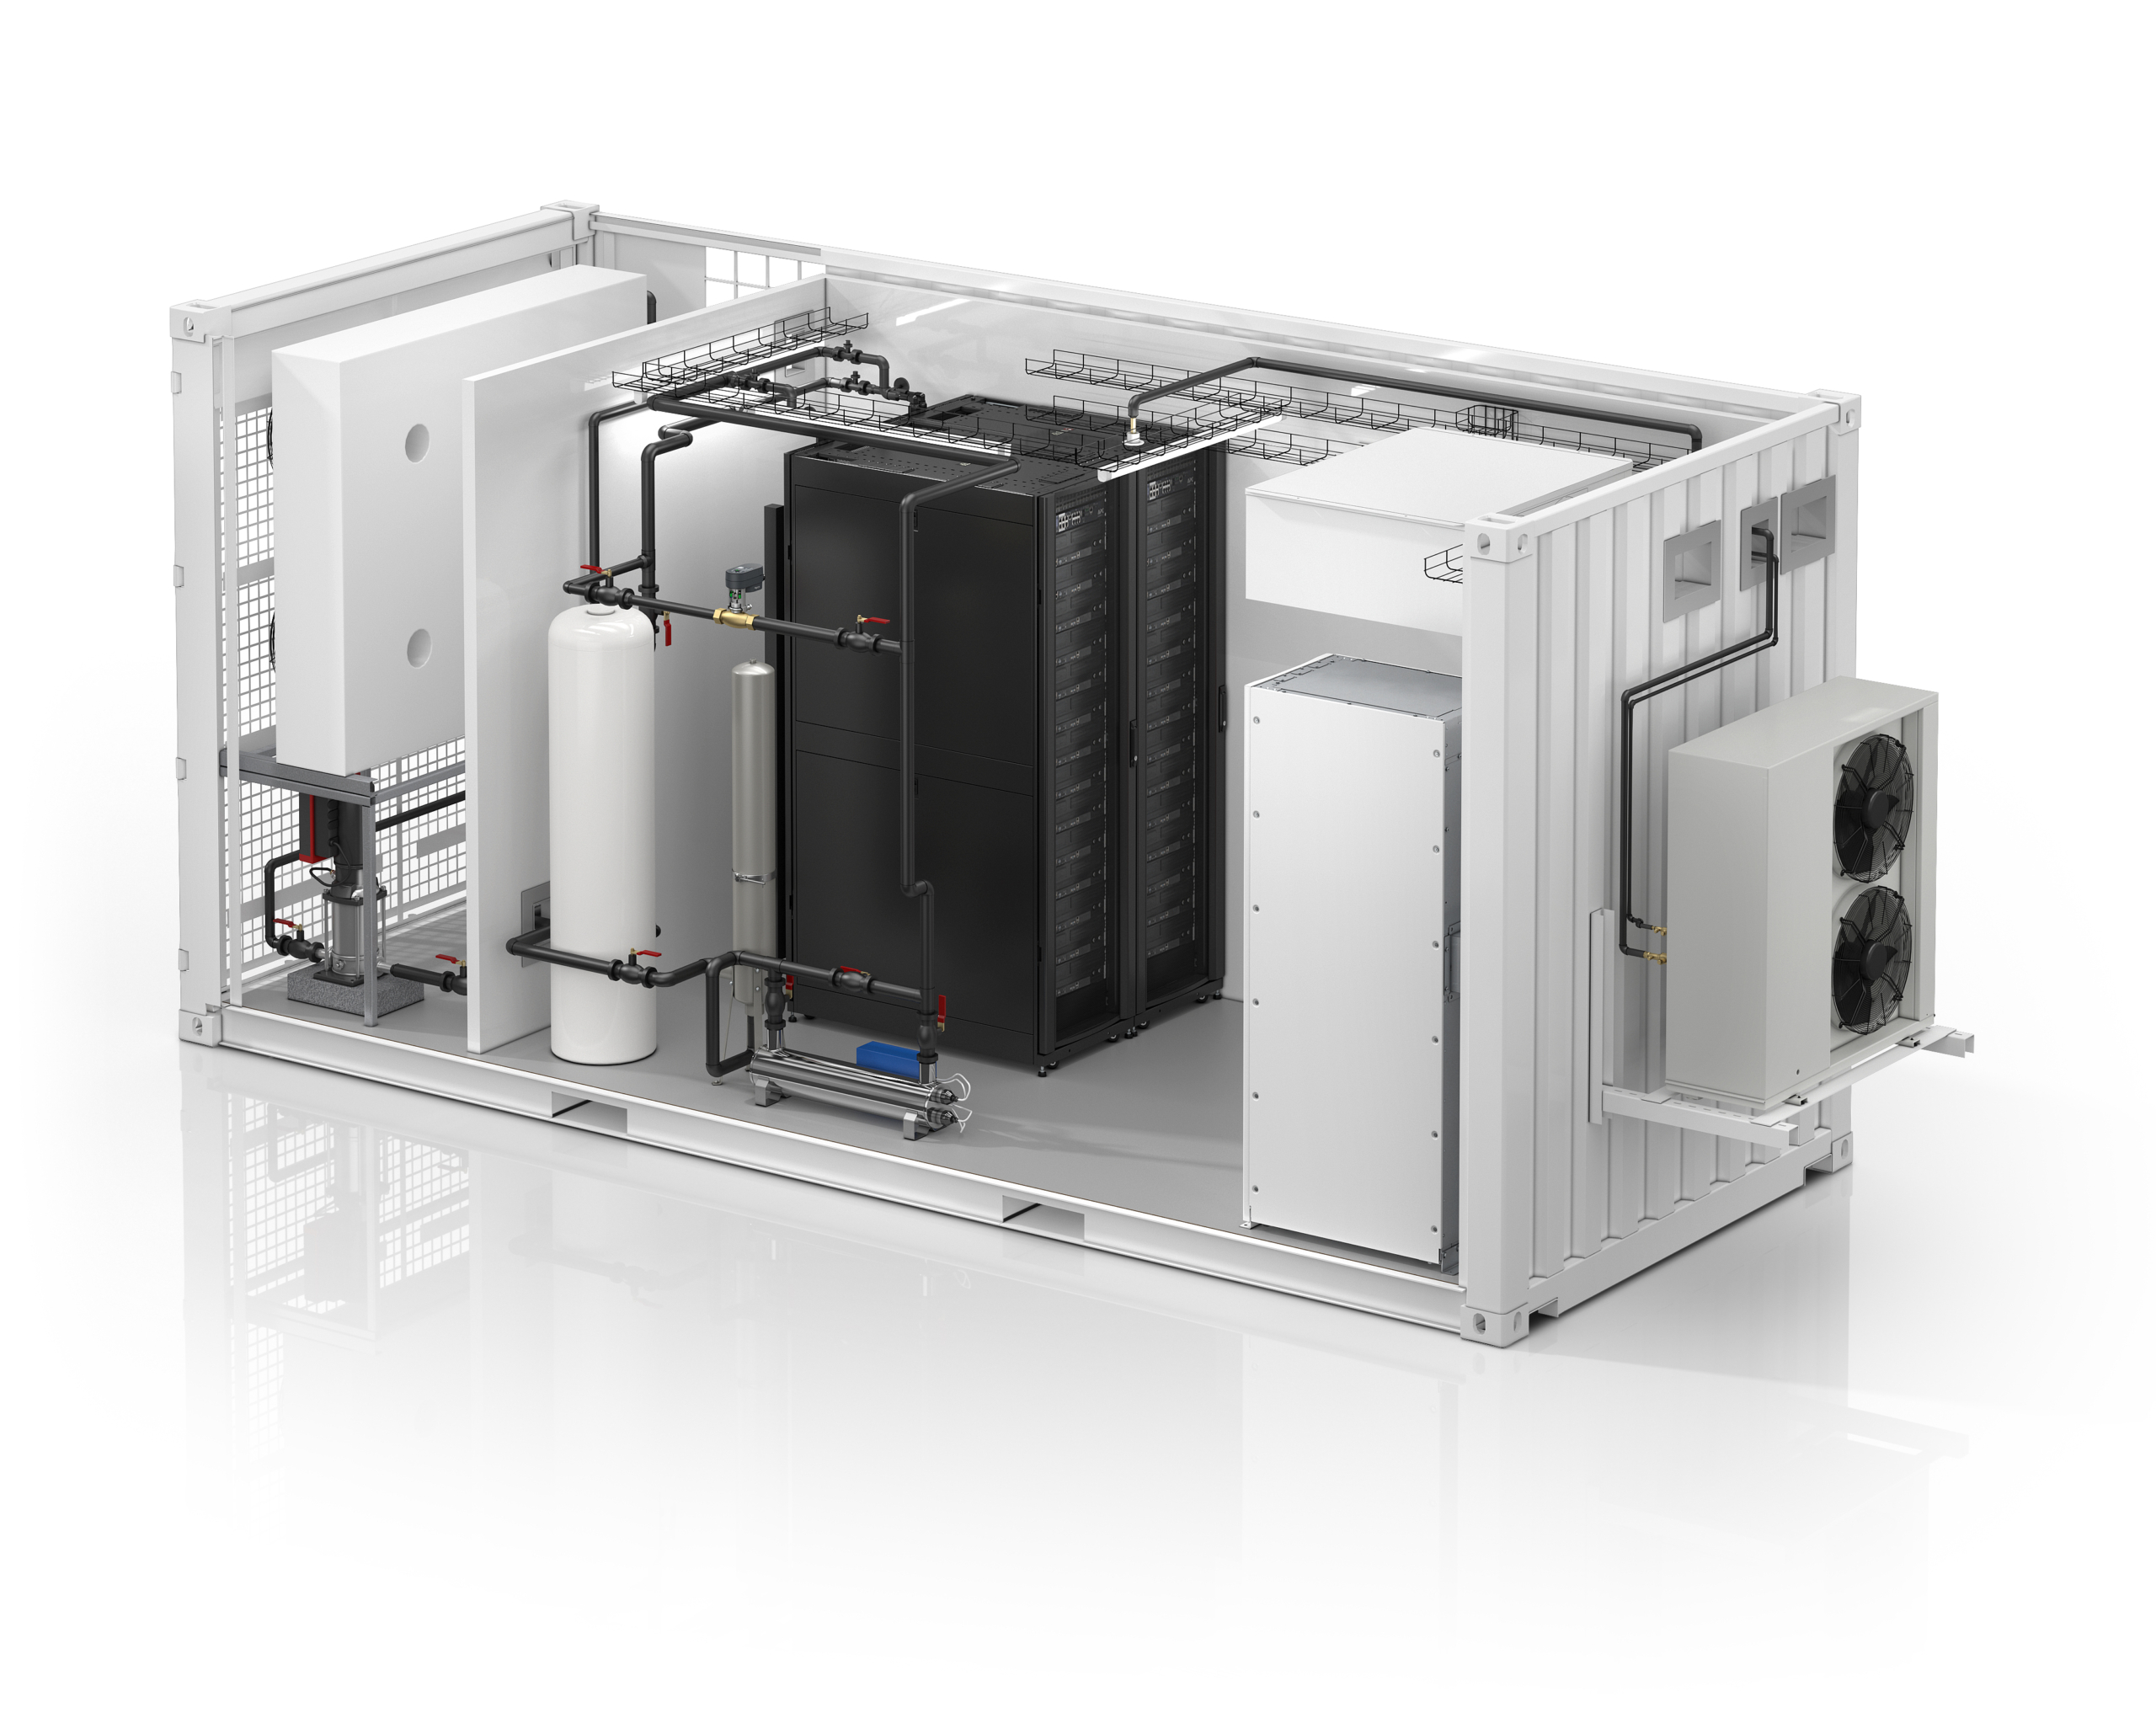 Schneider Electrics lancerer et alt-i-ét, væskekølet, modulært EcoStruxure™-datacenter.